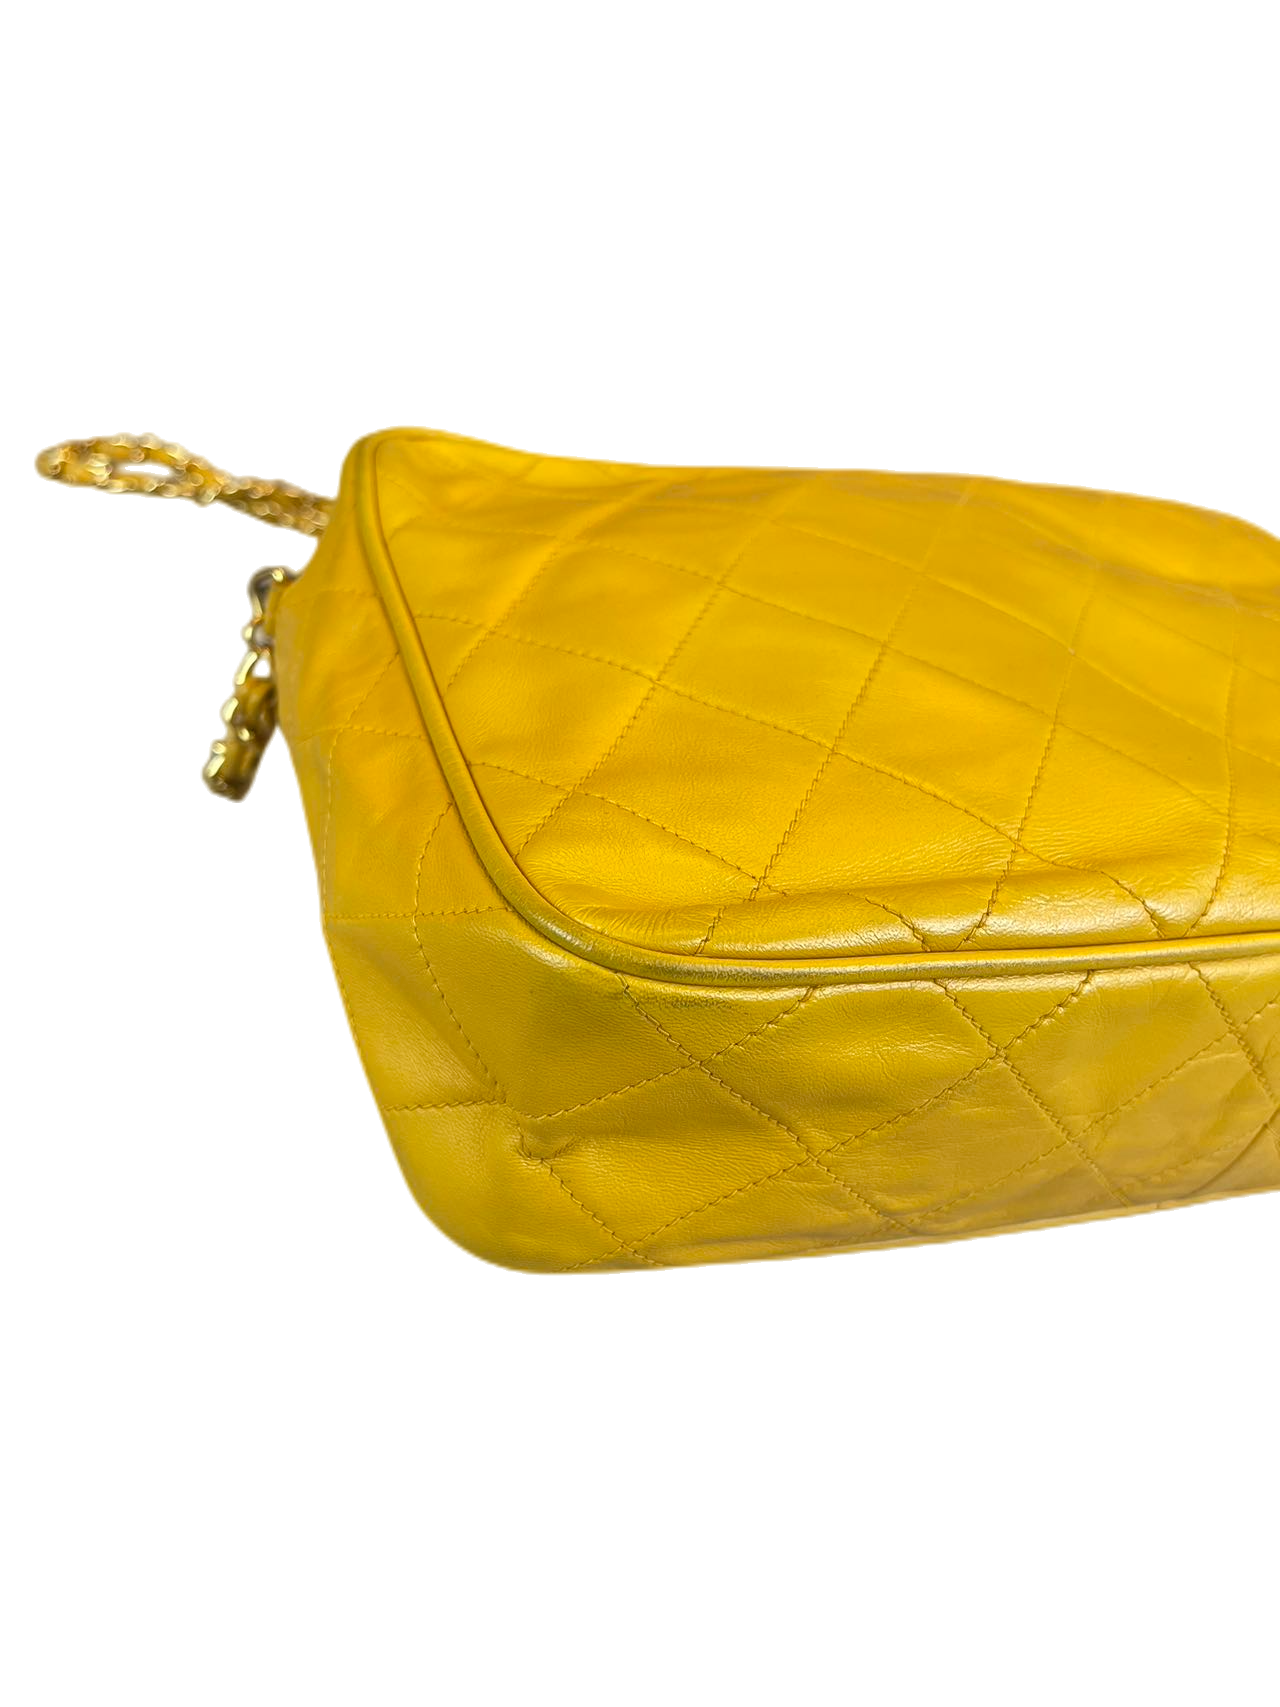 Preloved Chanel Yellow Leather Vintage Shoulder Bag Crossbody